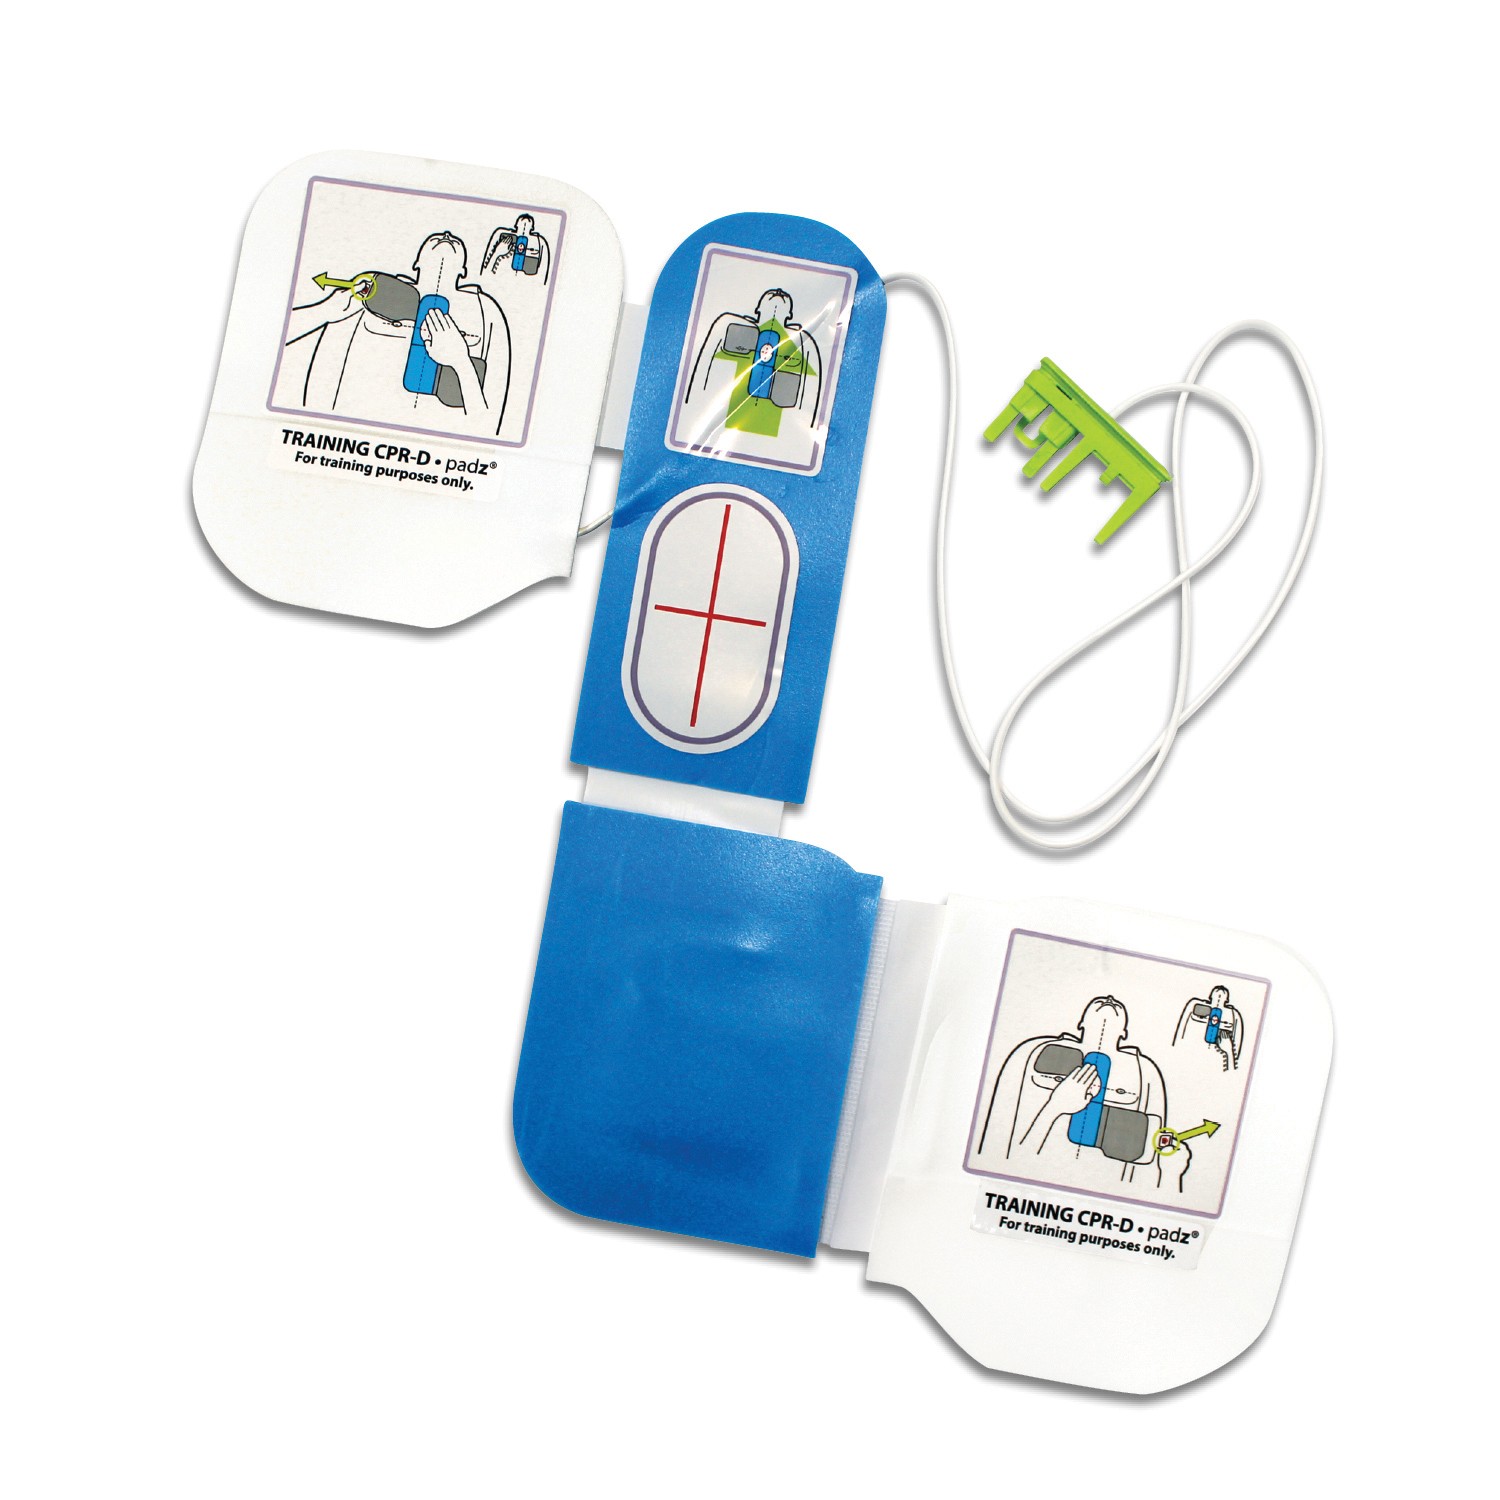 Zoll Defibrillator Accessories